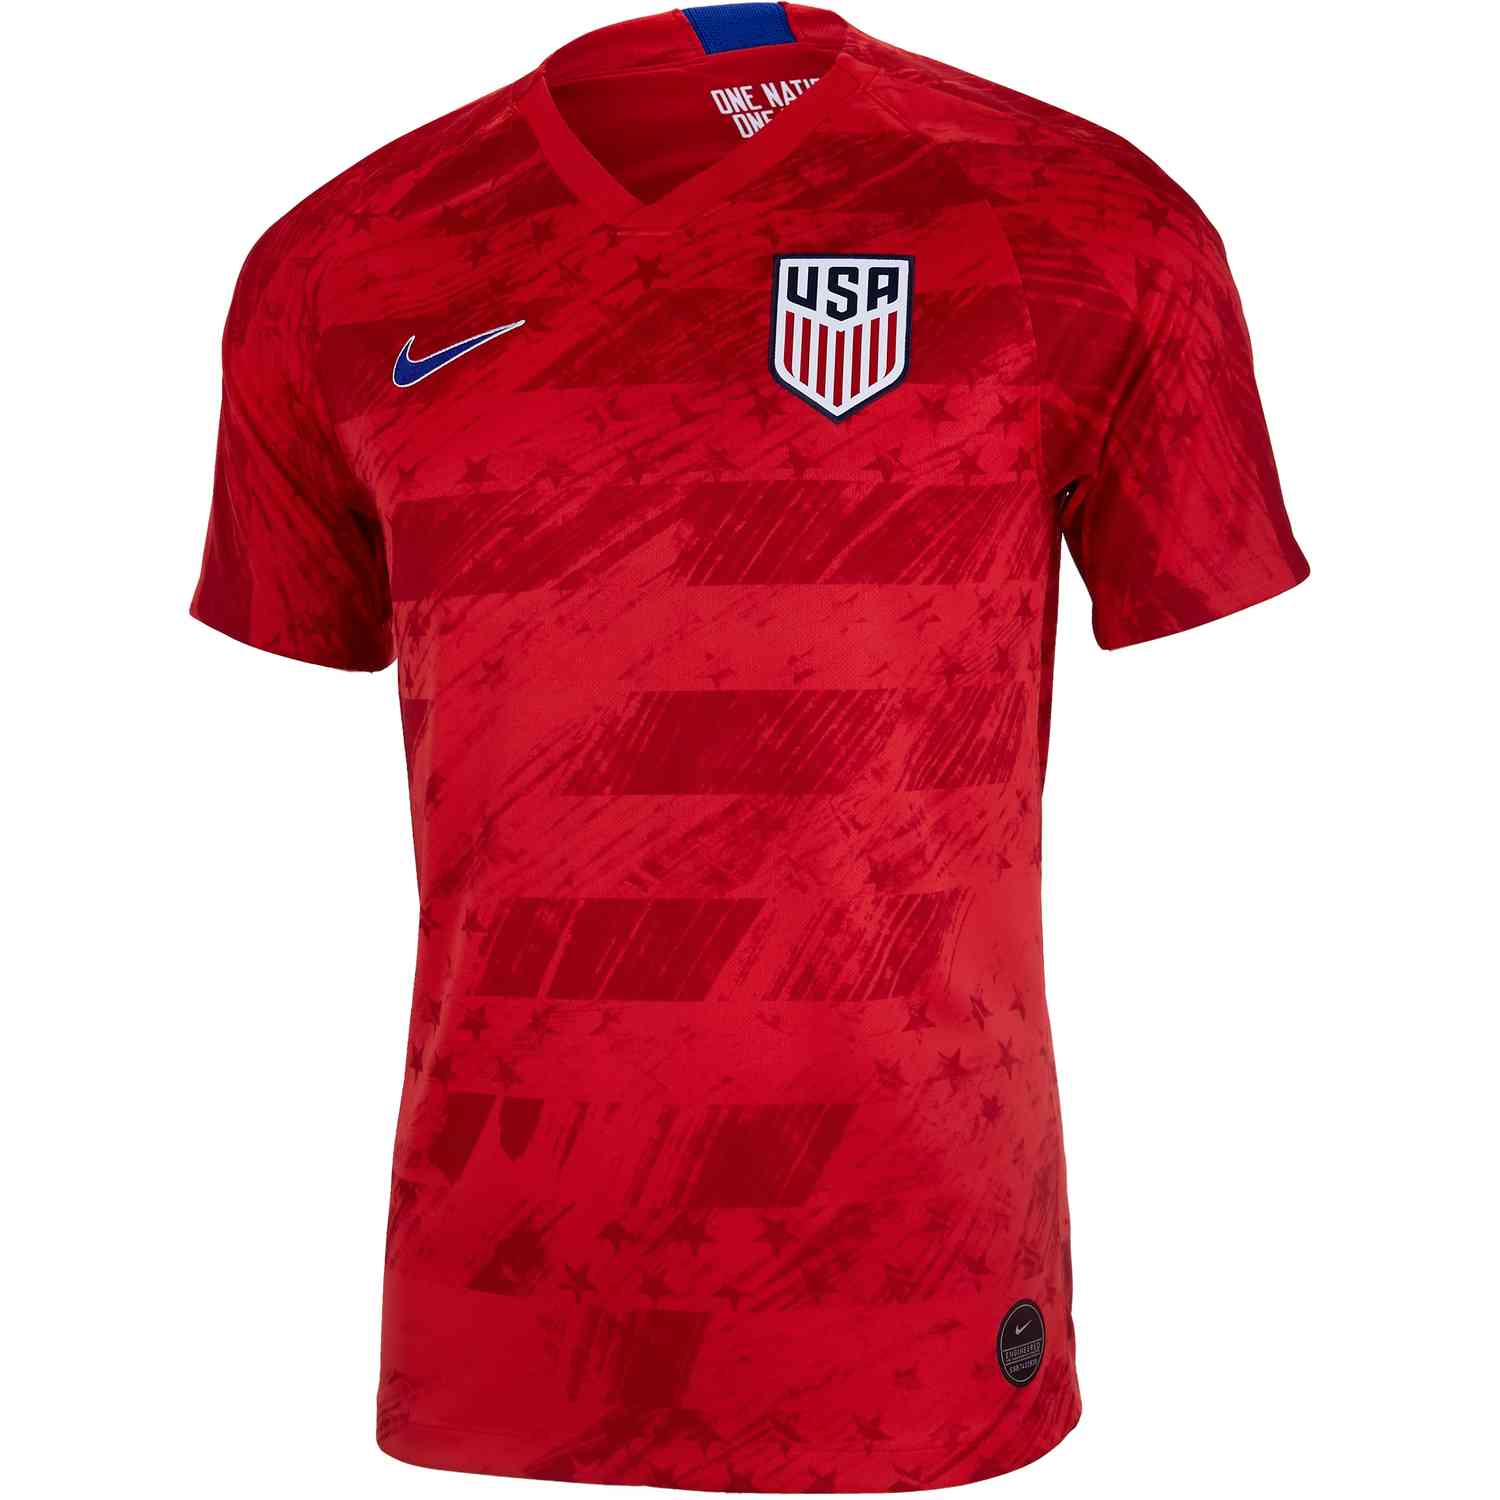 Nike USMNT Away Jersey - Speed Red/Bright Blue - SoccerPro